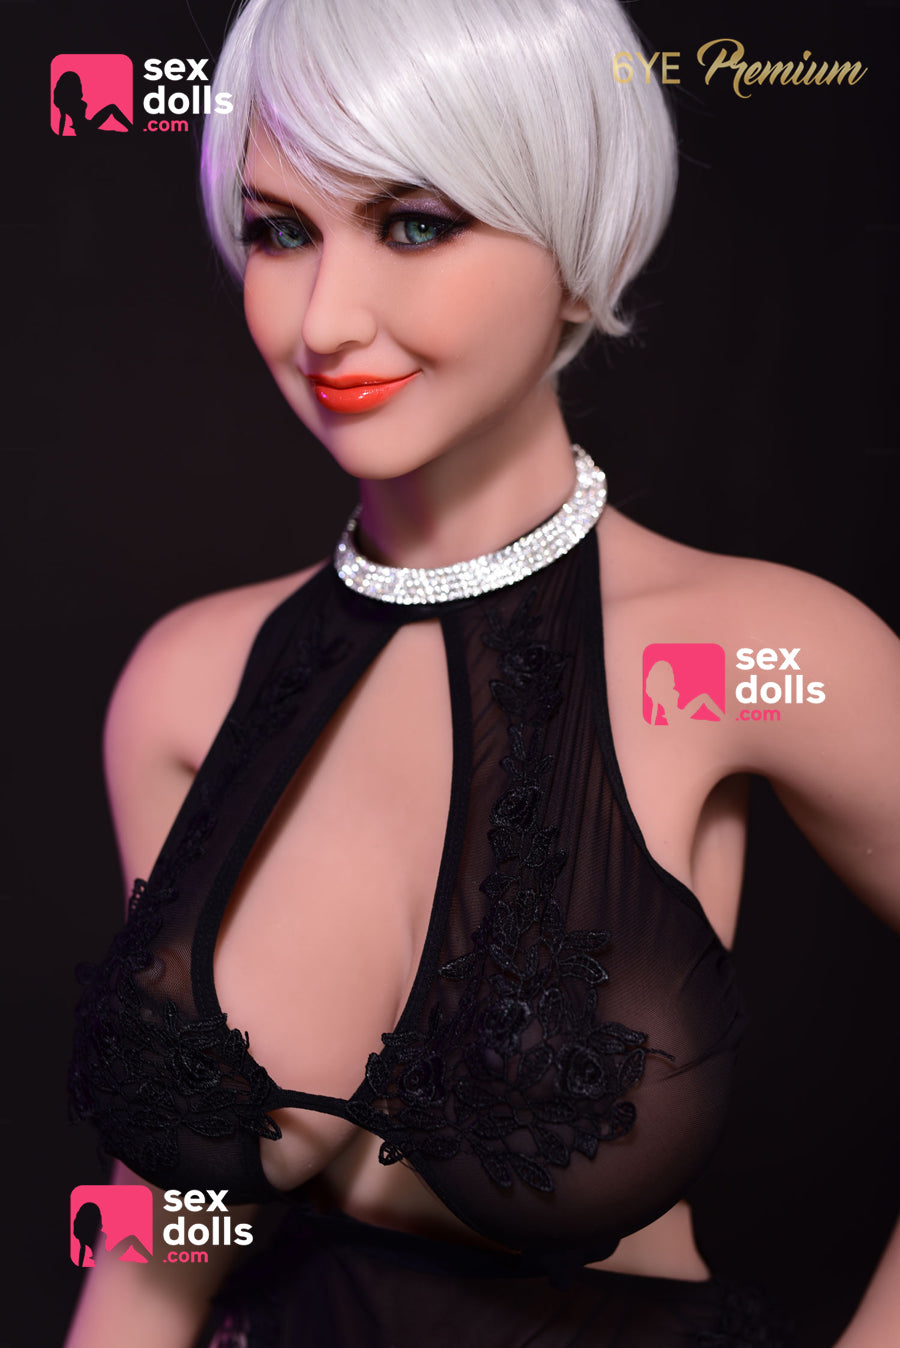 mona 156cm blonde big boobs athletic tpe sex doll(2)